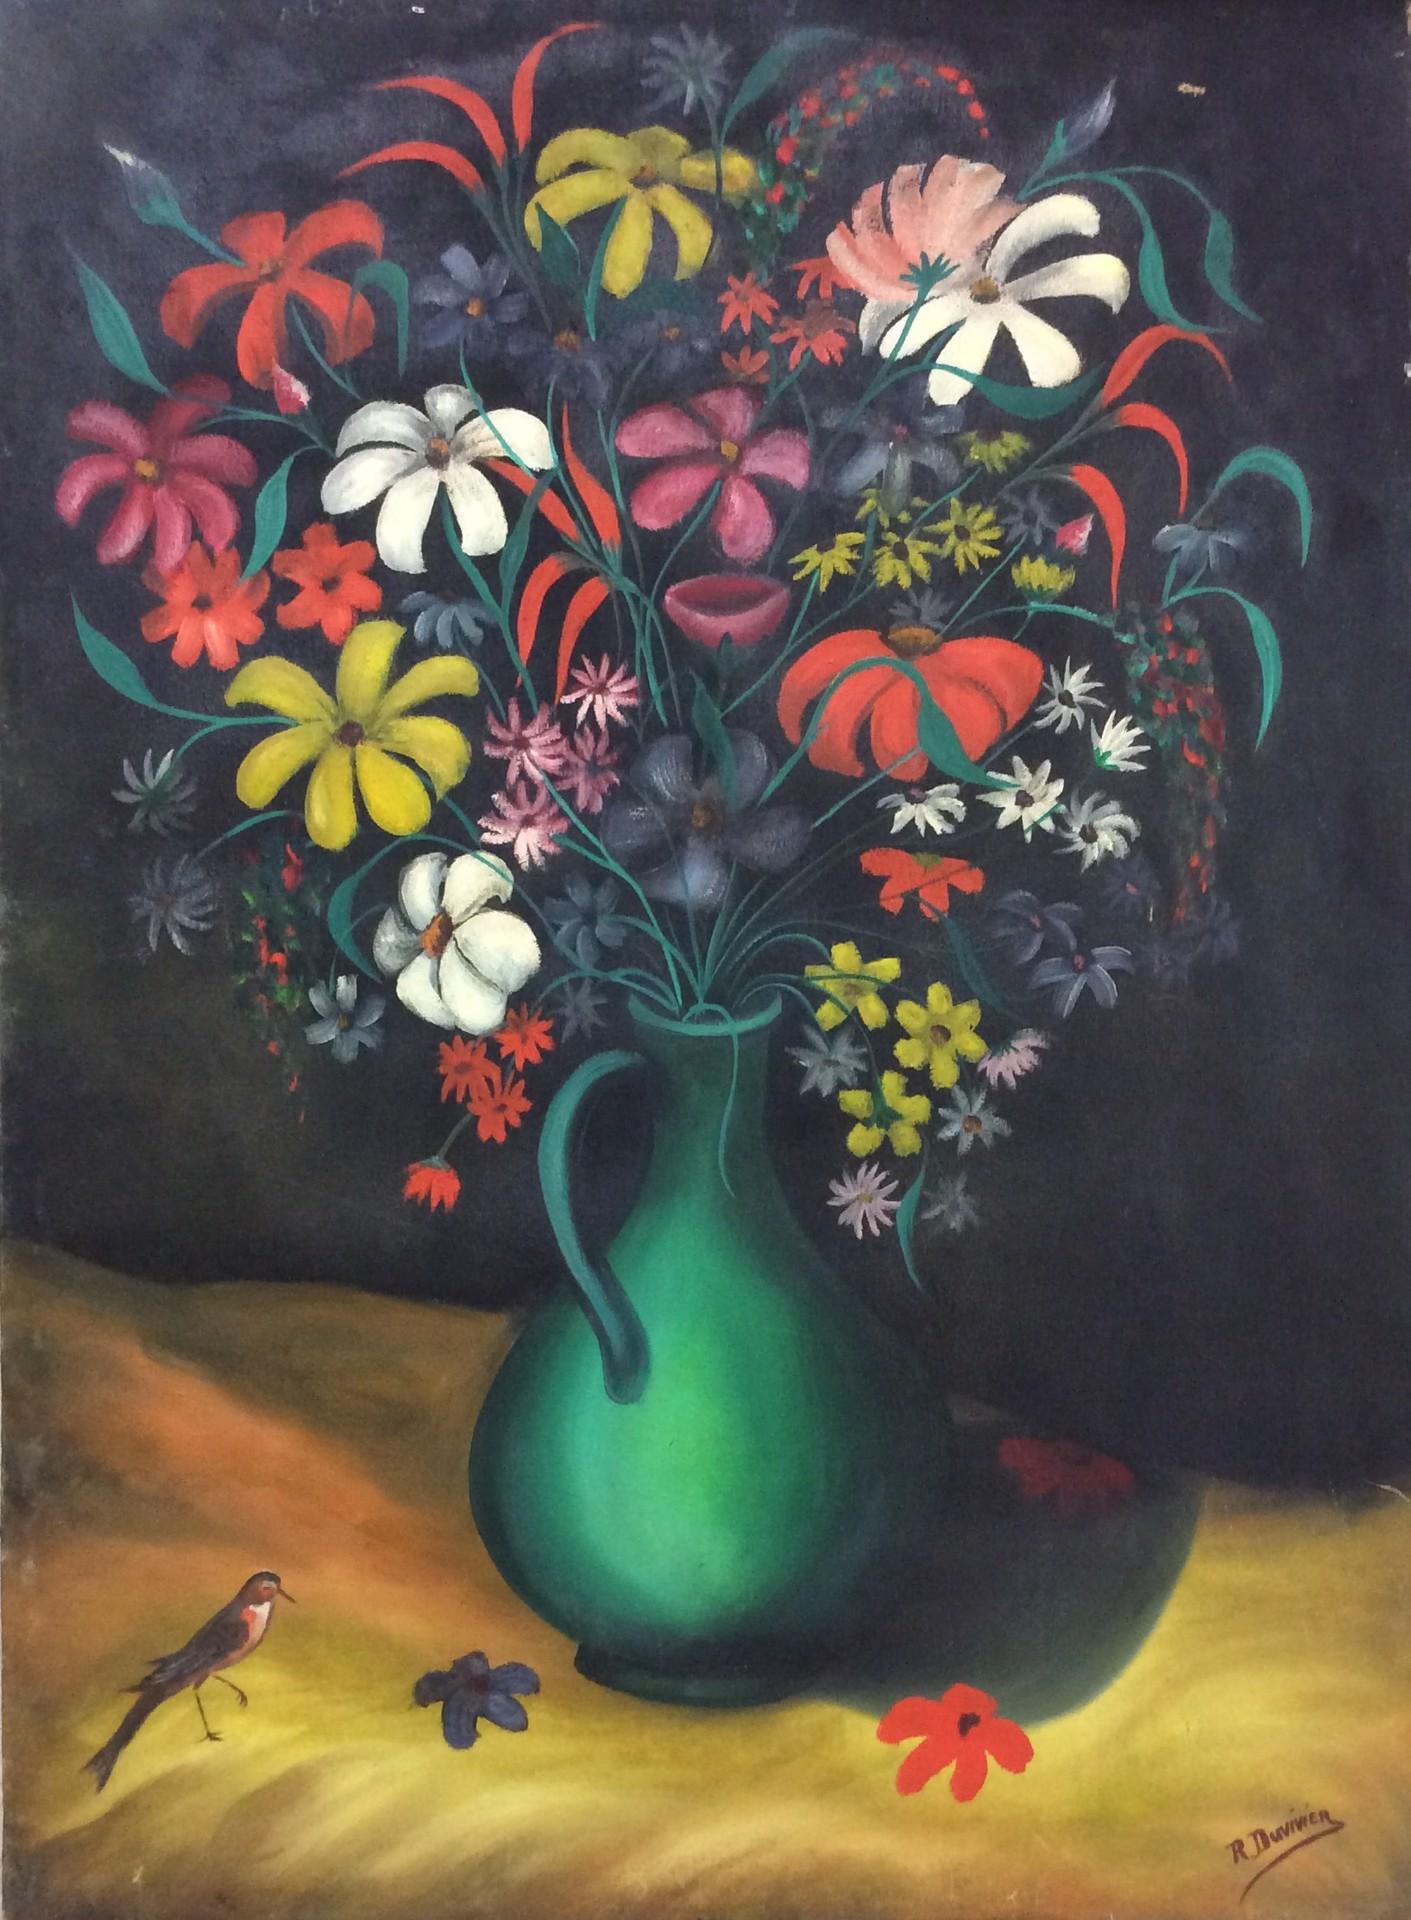 Vase of Flowers #1-2-95MFN - Art by Raymond Duvivier